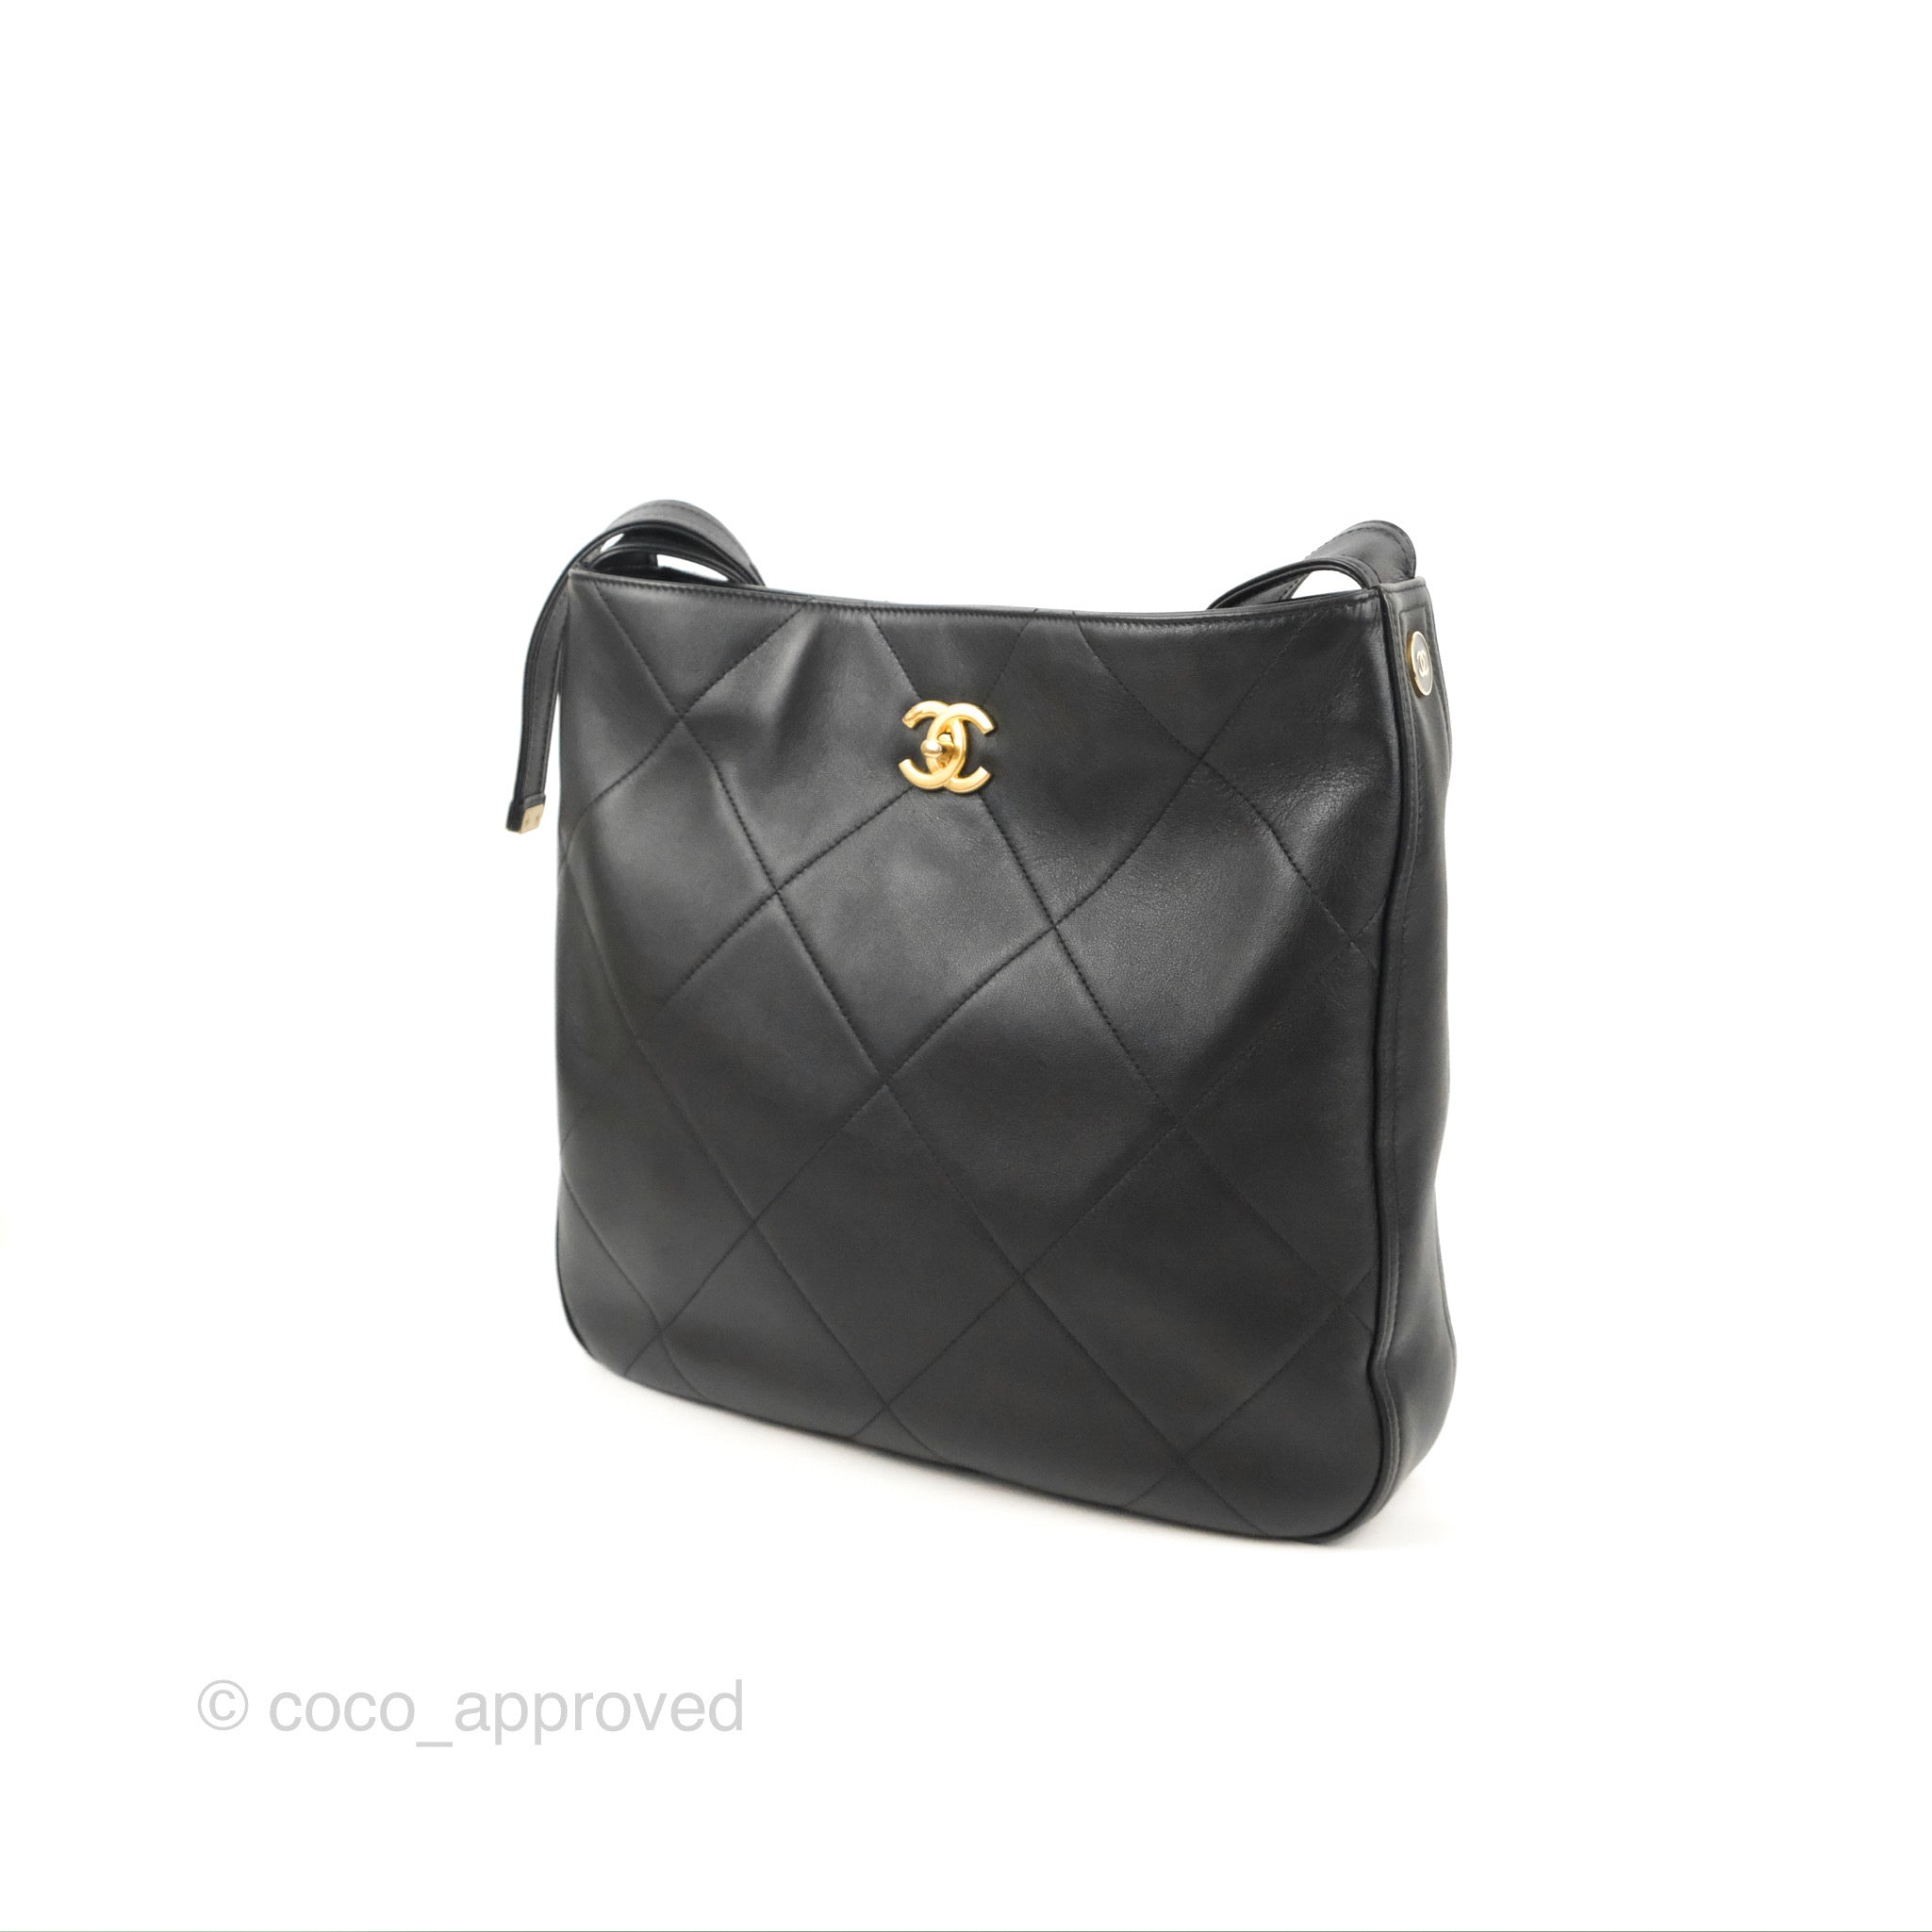 Chanel Vintage Black Chevron Calfskin Medium Classic Flap Bag